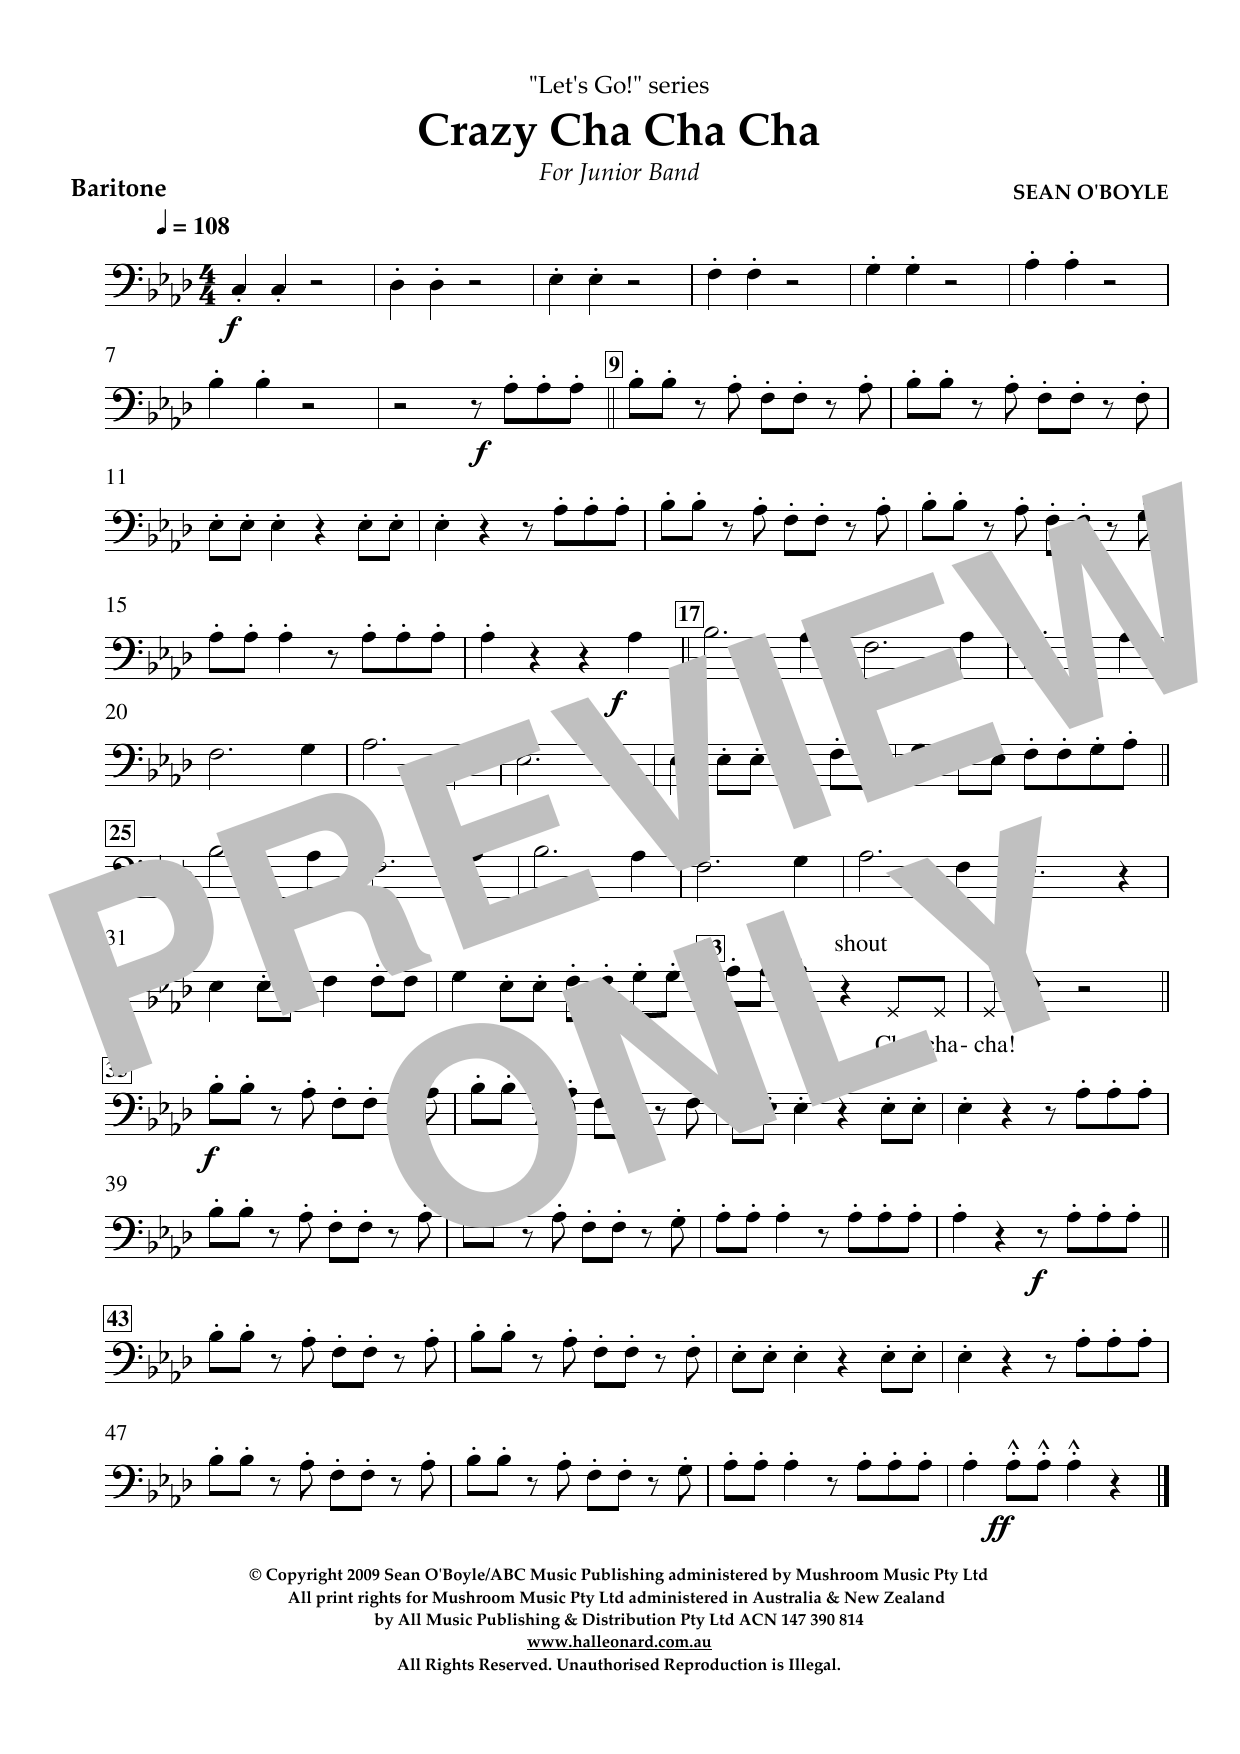 Sean O'Boyle Crazy Cha Cha Cha - Baritone Sheet Music Notes & Chords for Concert Band - Download or Print PDF